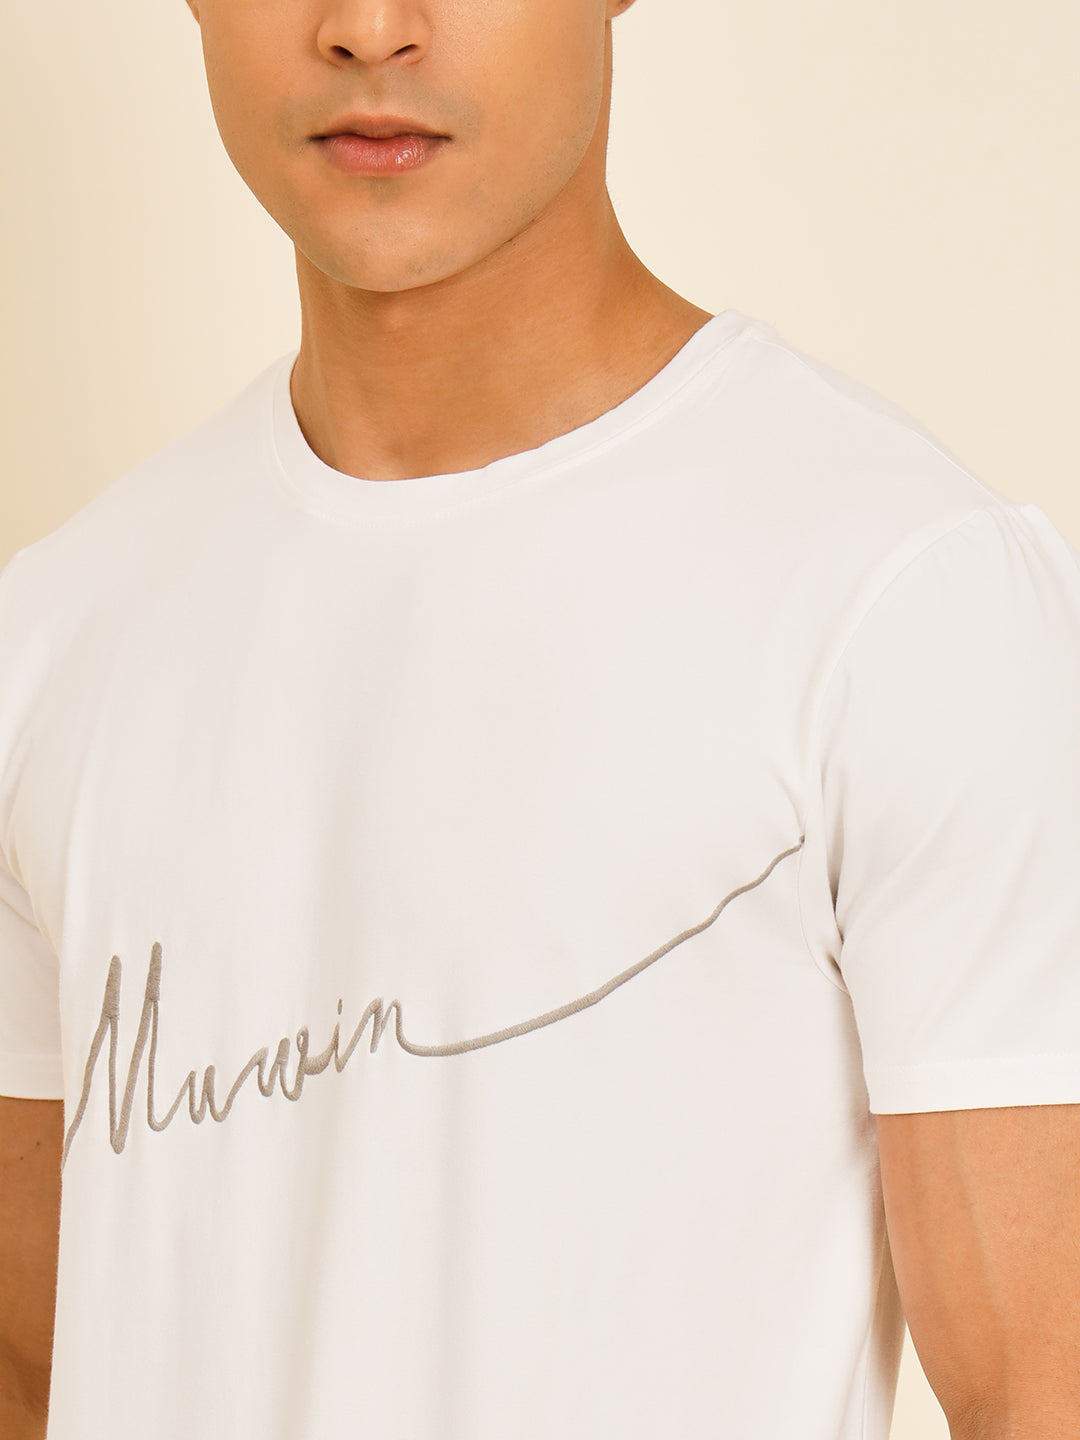 Muwin White Embroidered T-shirts